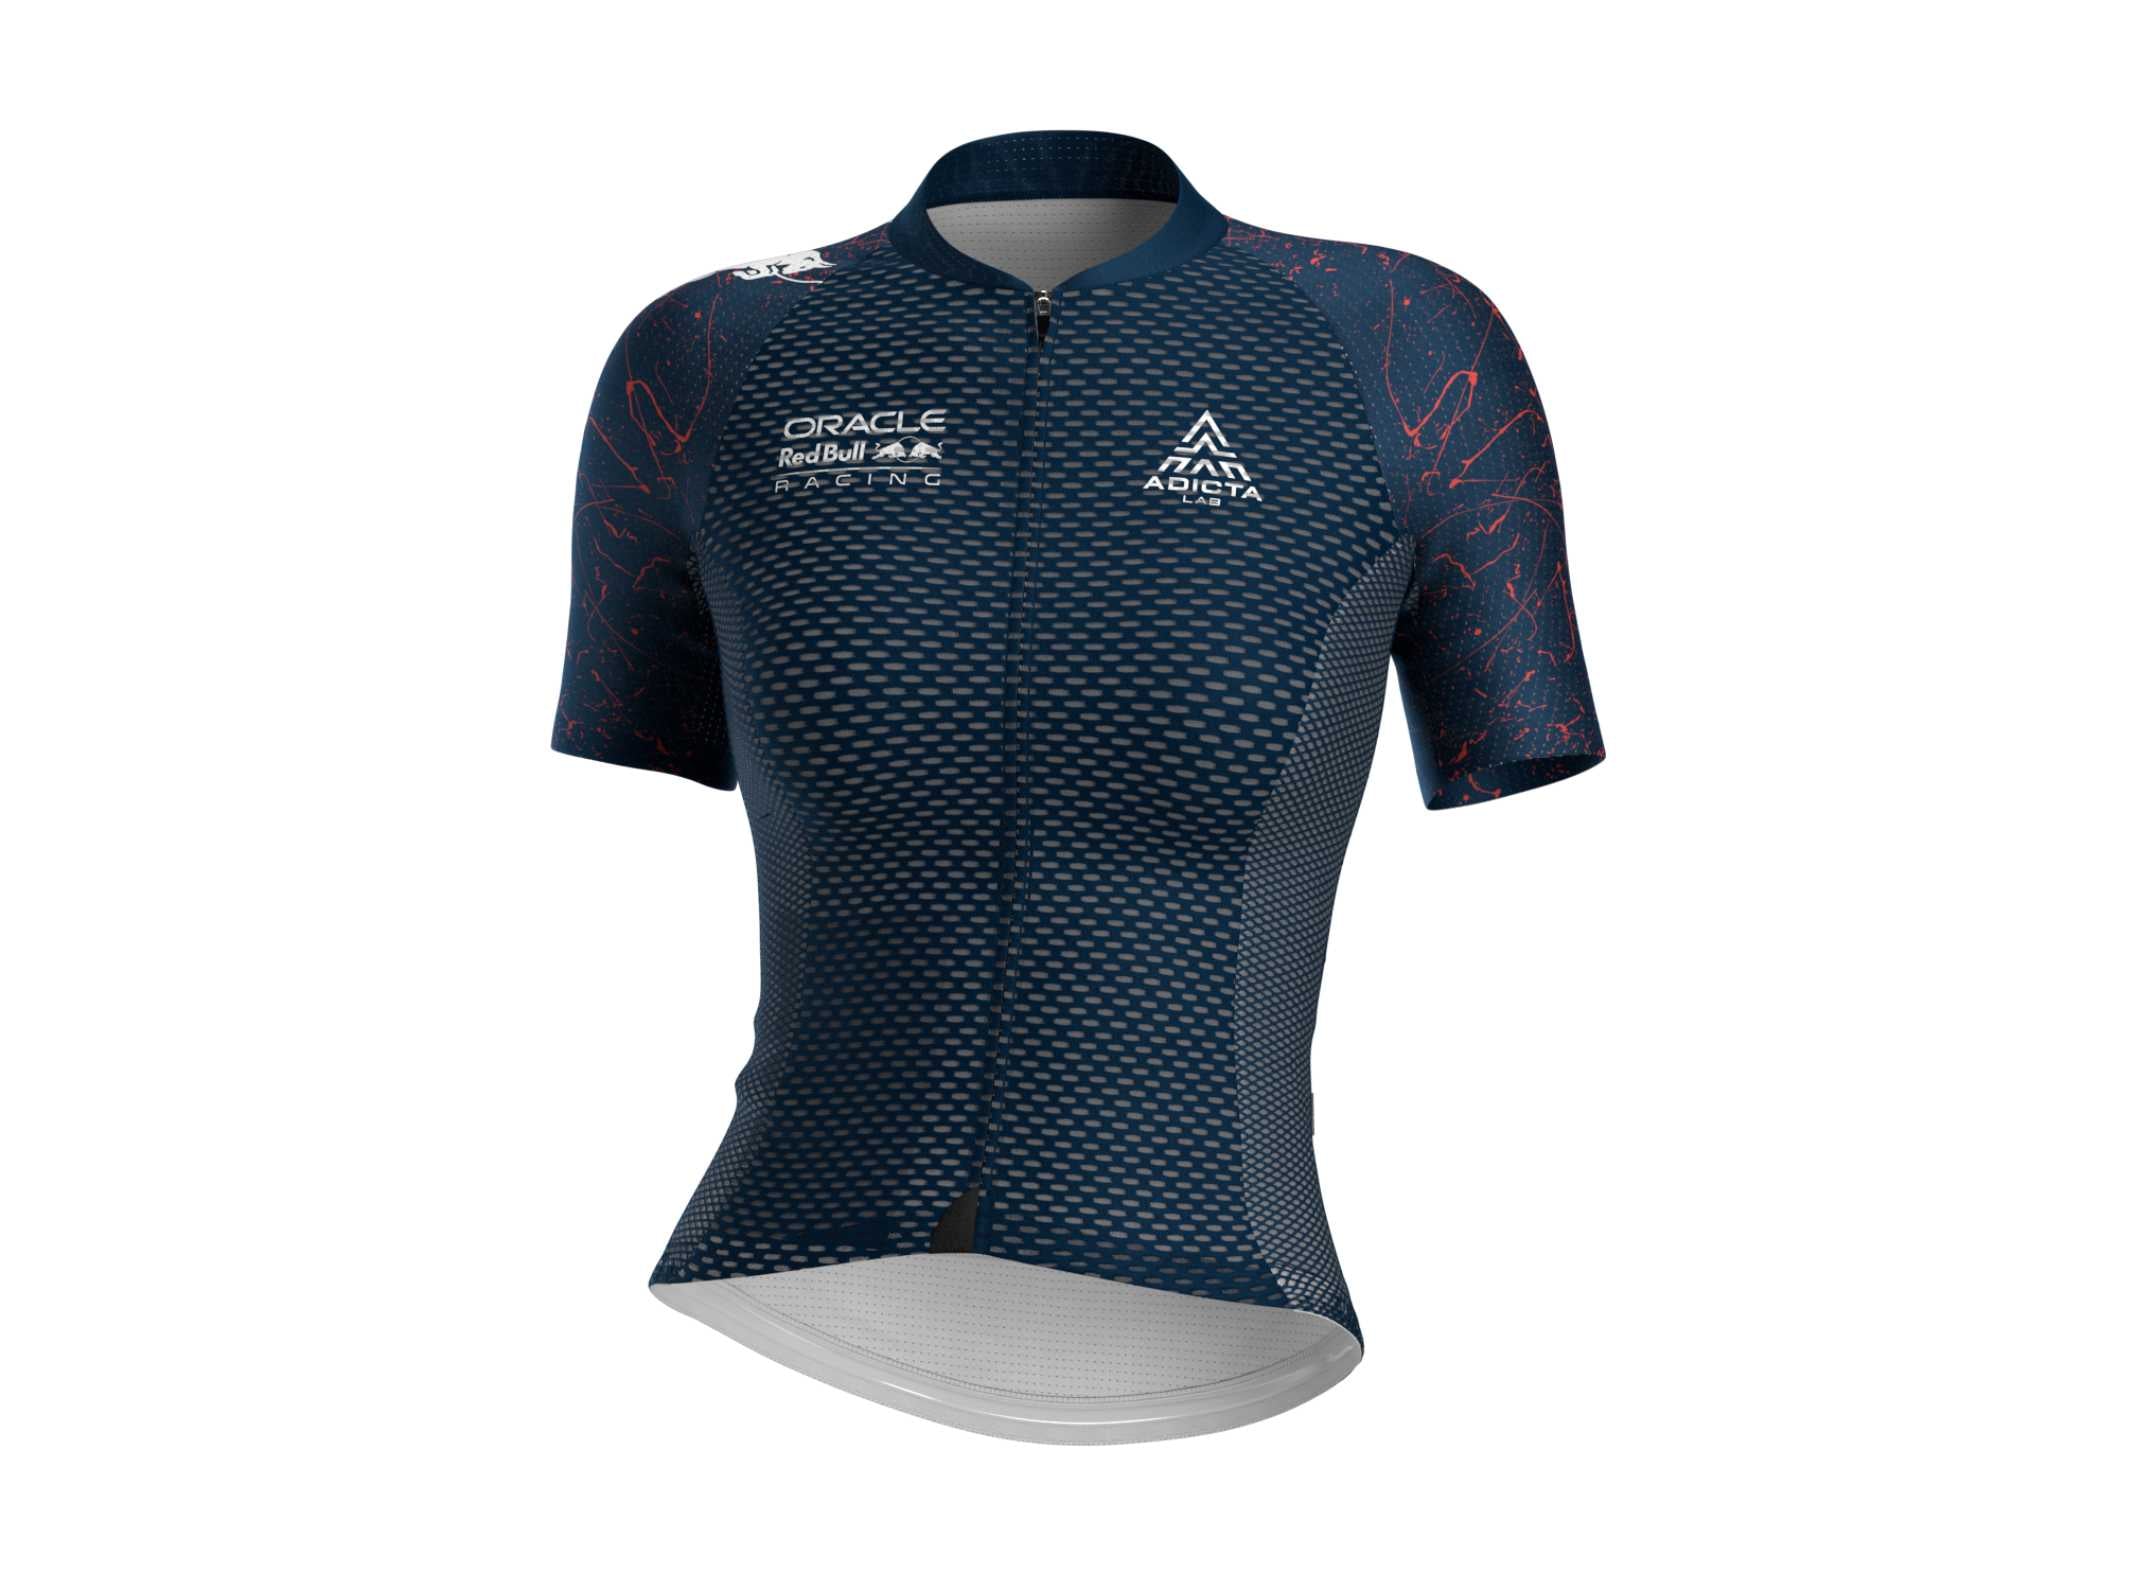 VALENT WMN Jersey S/S | ADICTA LAB | apparel | Apparel, Apparel | Cycling Jerseys